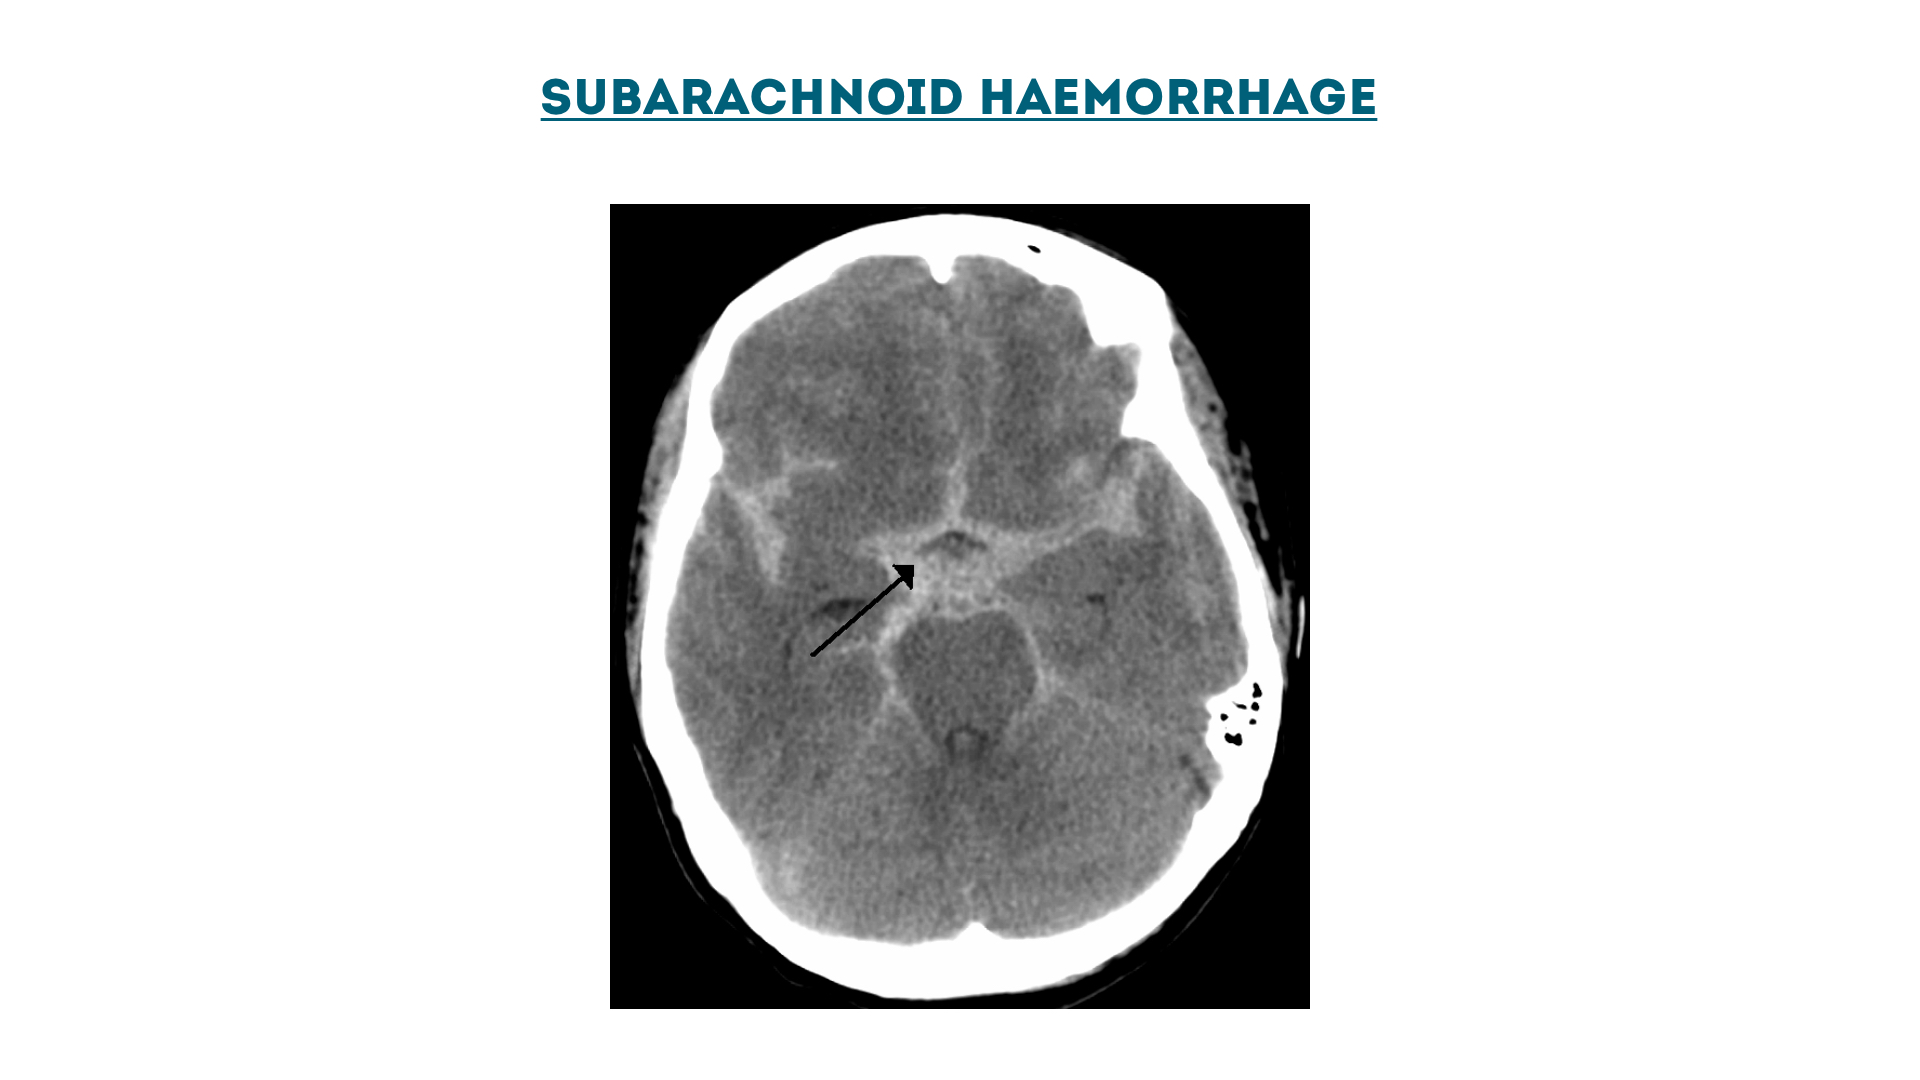 Figure 7 : Subarachnoid haemorrhage